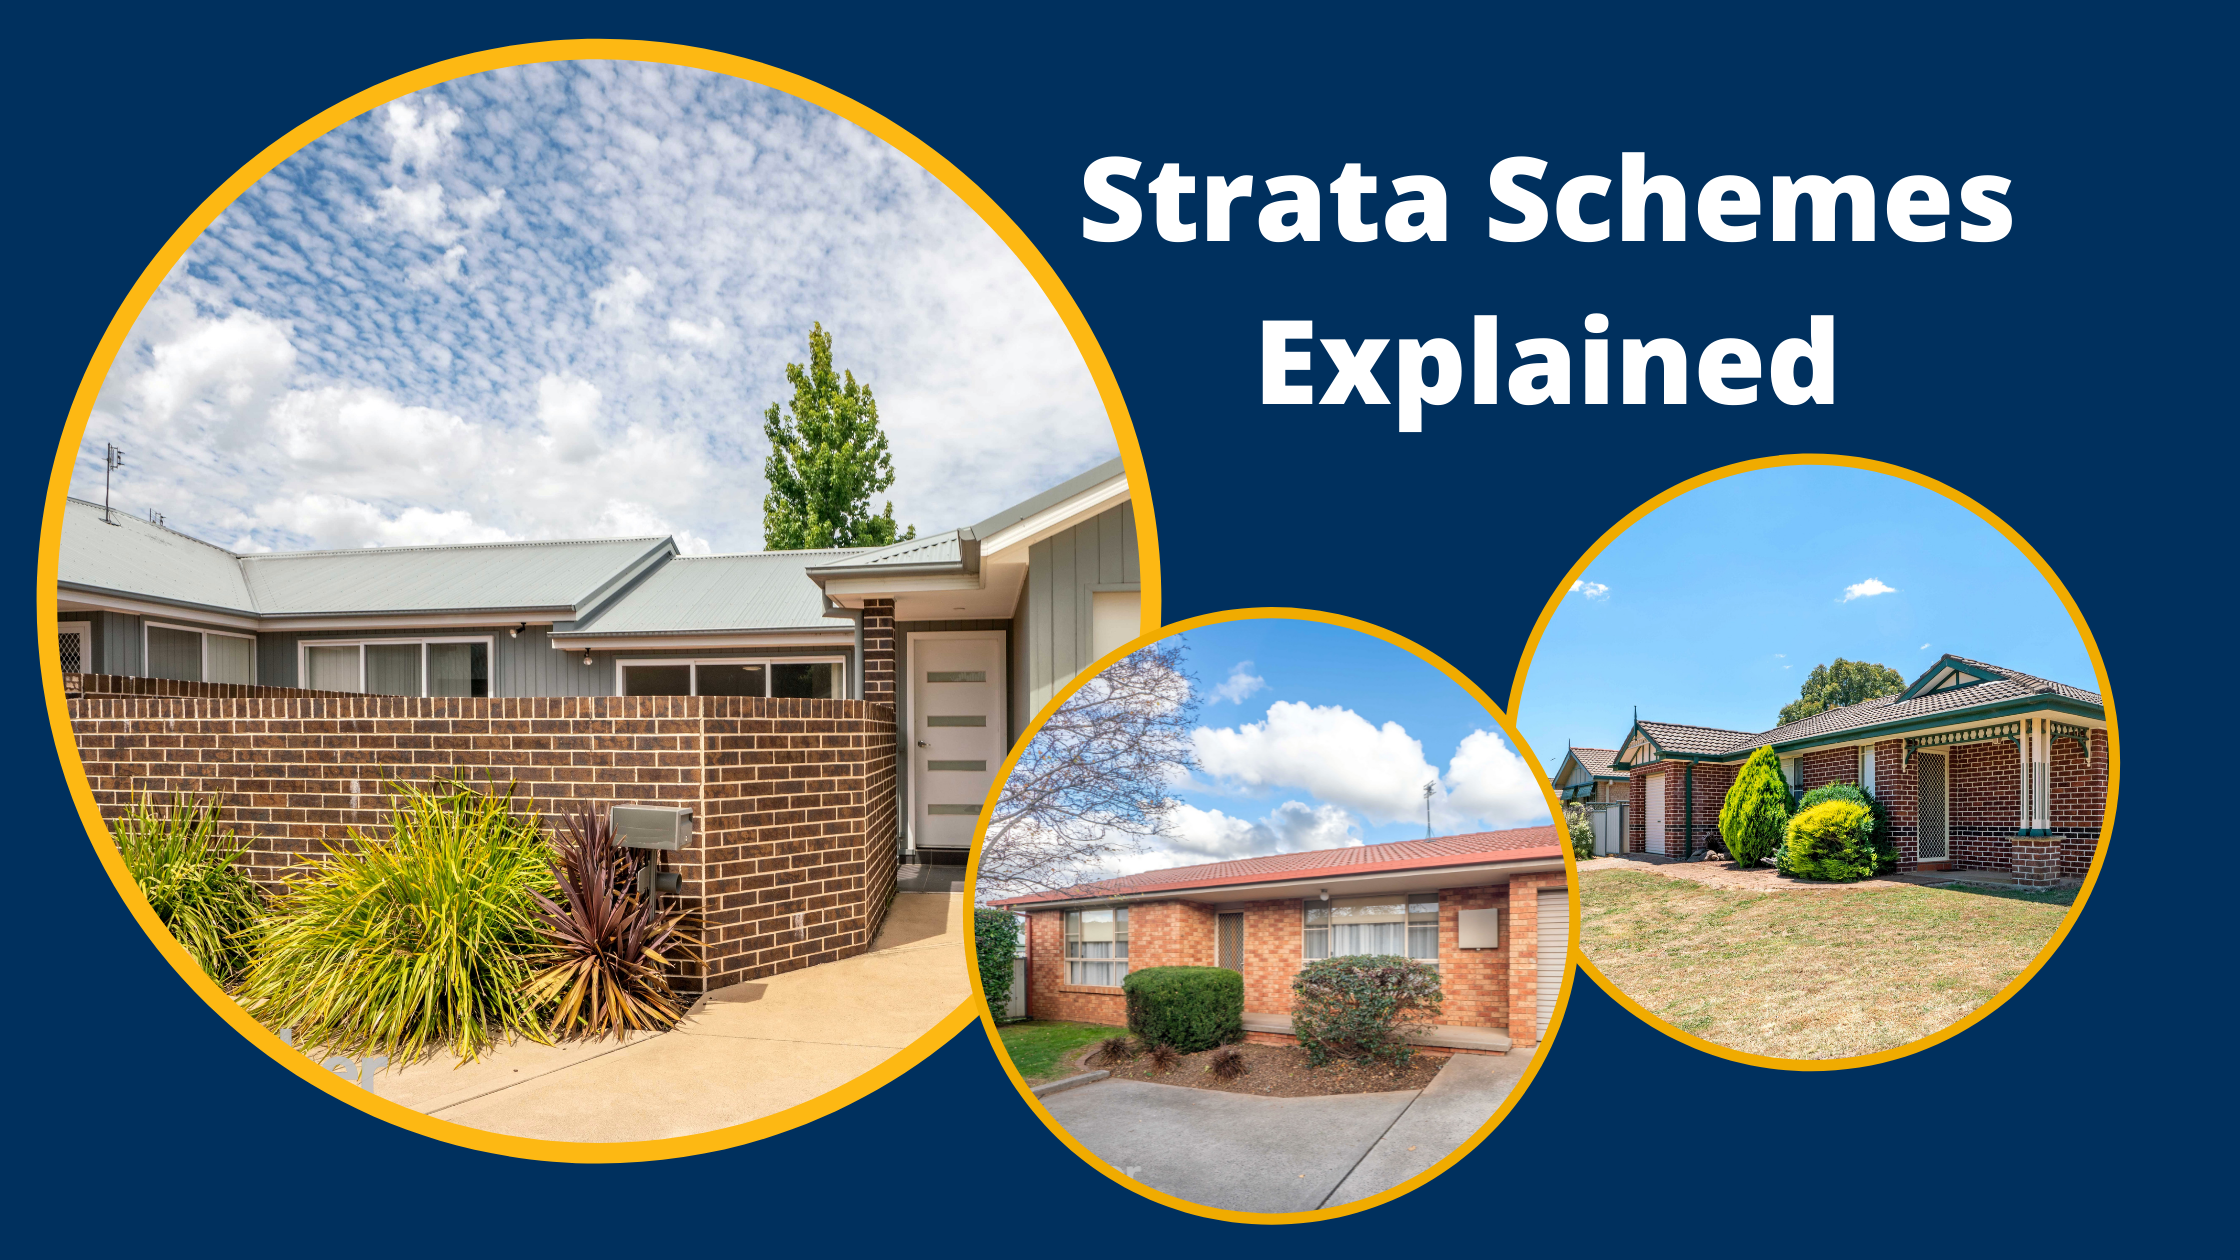 Strata Schemes Explained